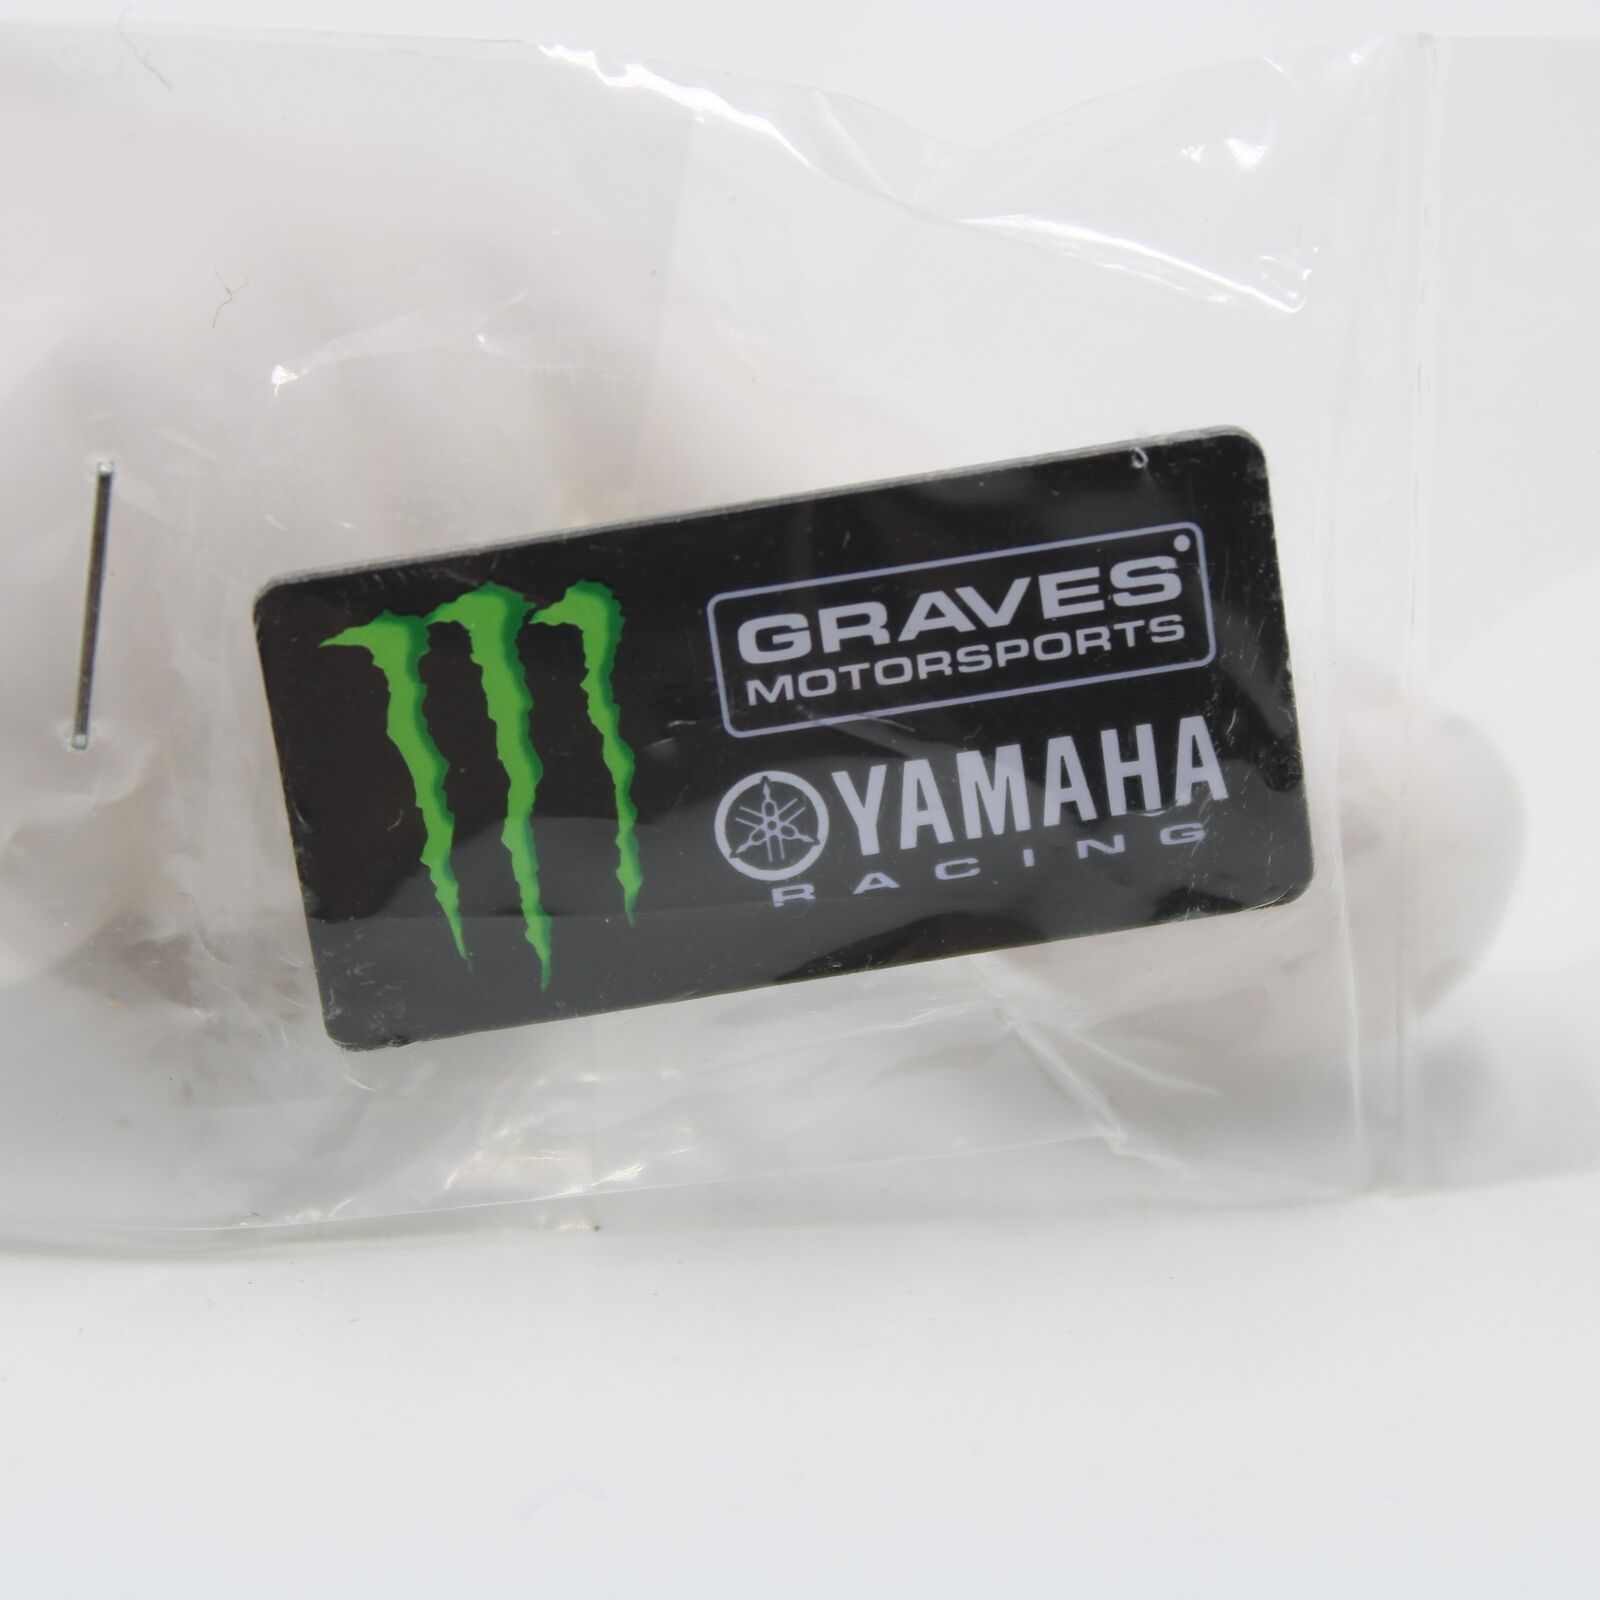 Graves Motorsports Monster Energy Yamaha Racing Team Hat Lapel Pin Pinback